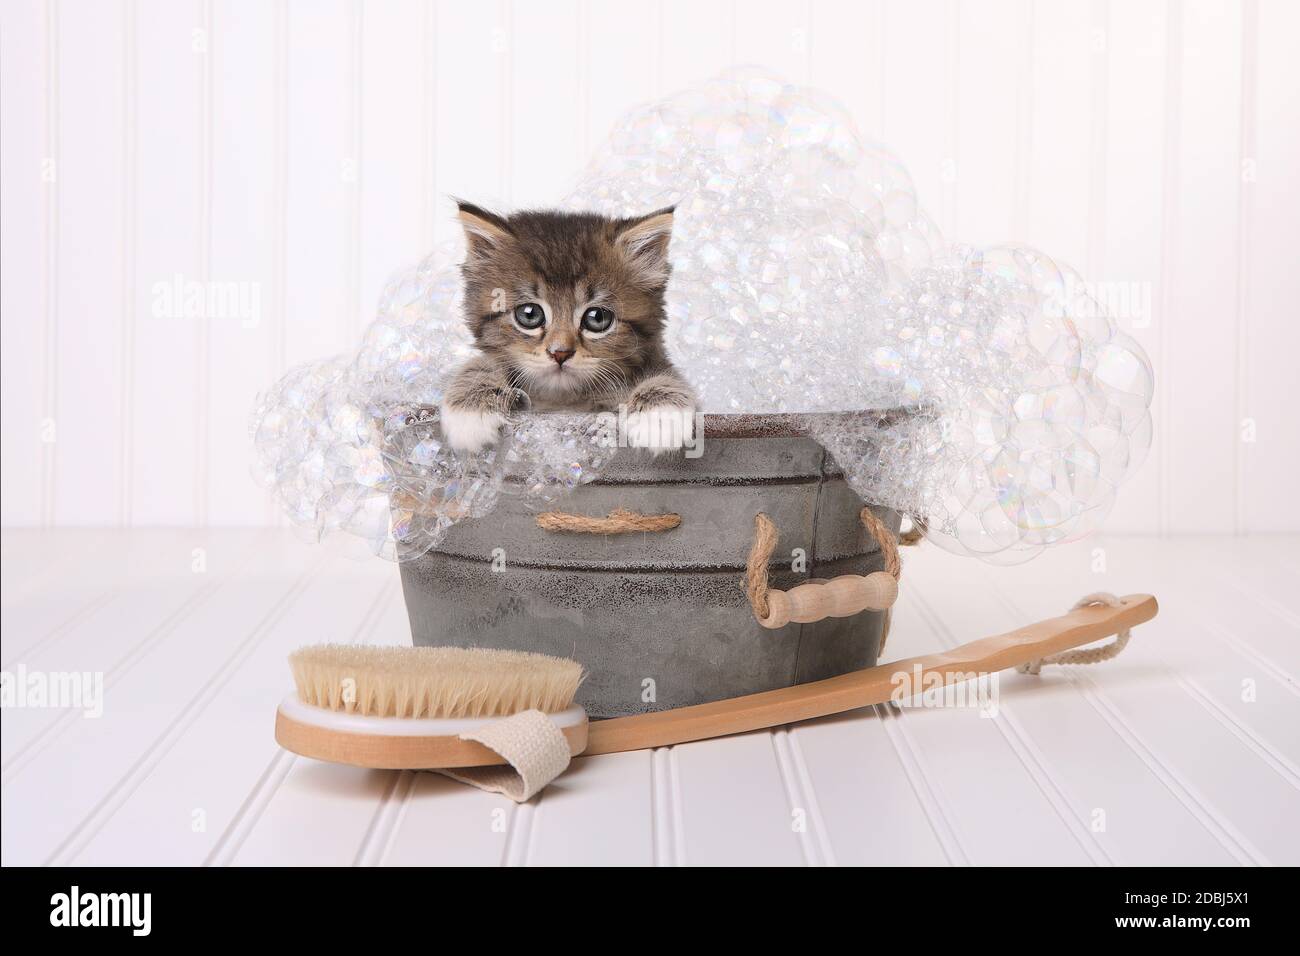 kitten-in-washtub-getting-groomed-by-bub